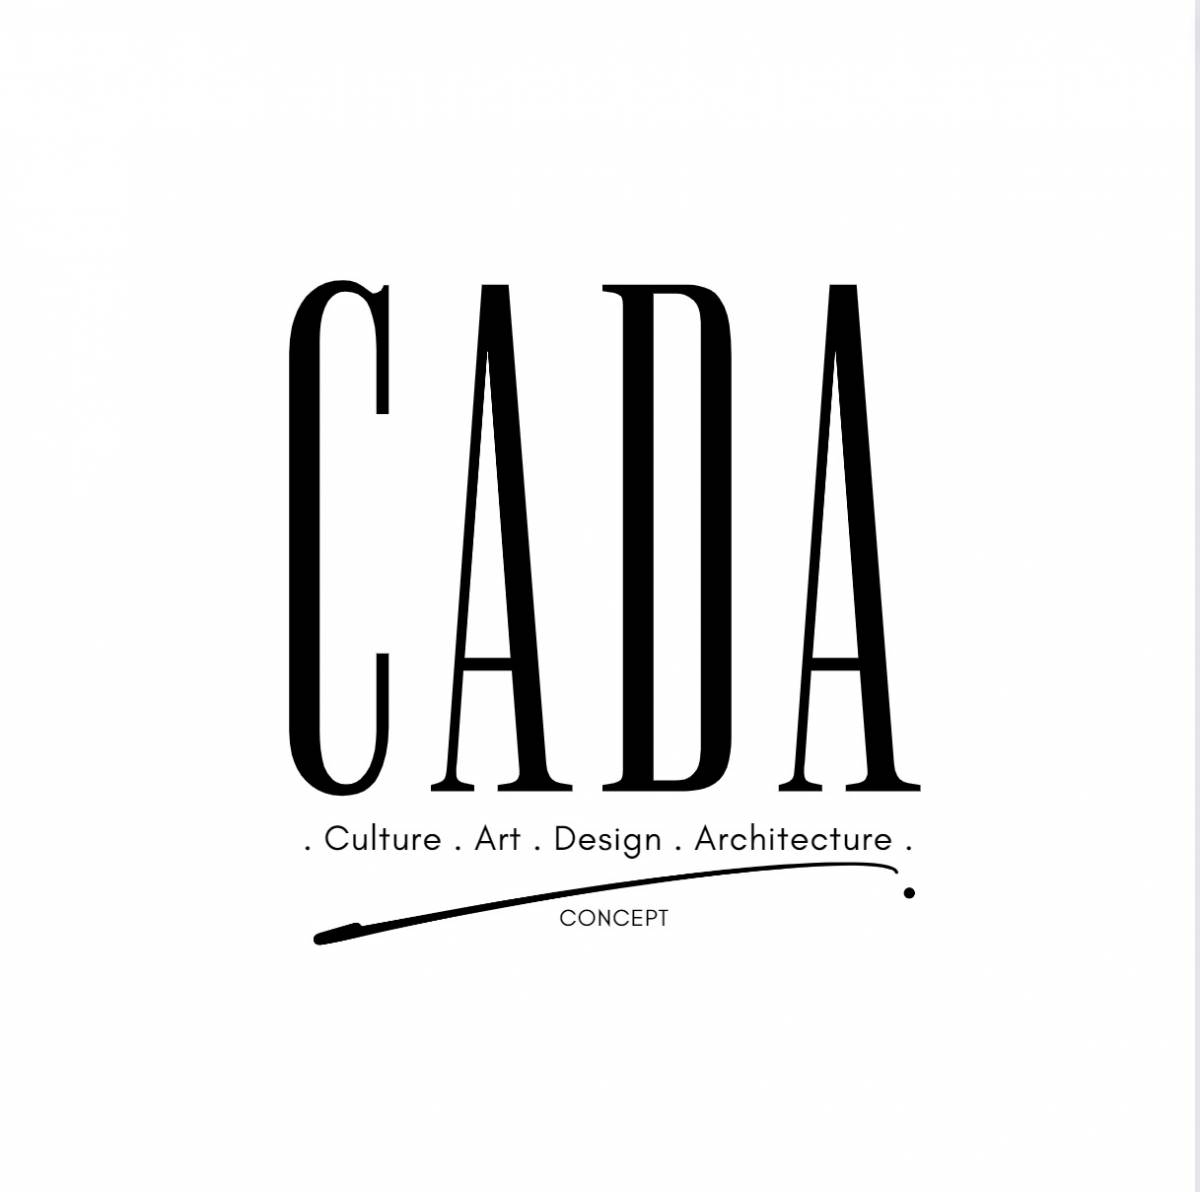 Carina Batista - Porto - Design de Logotipos